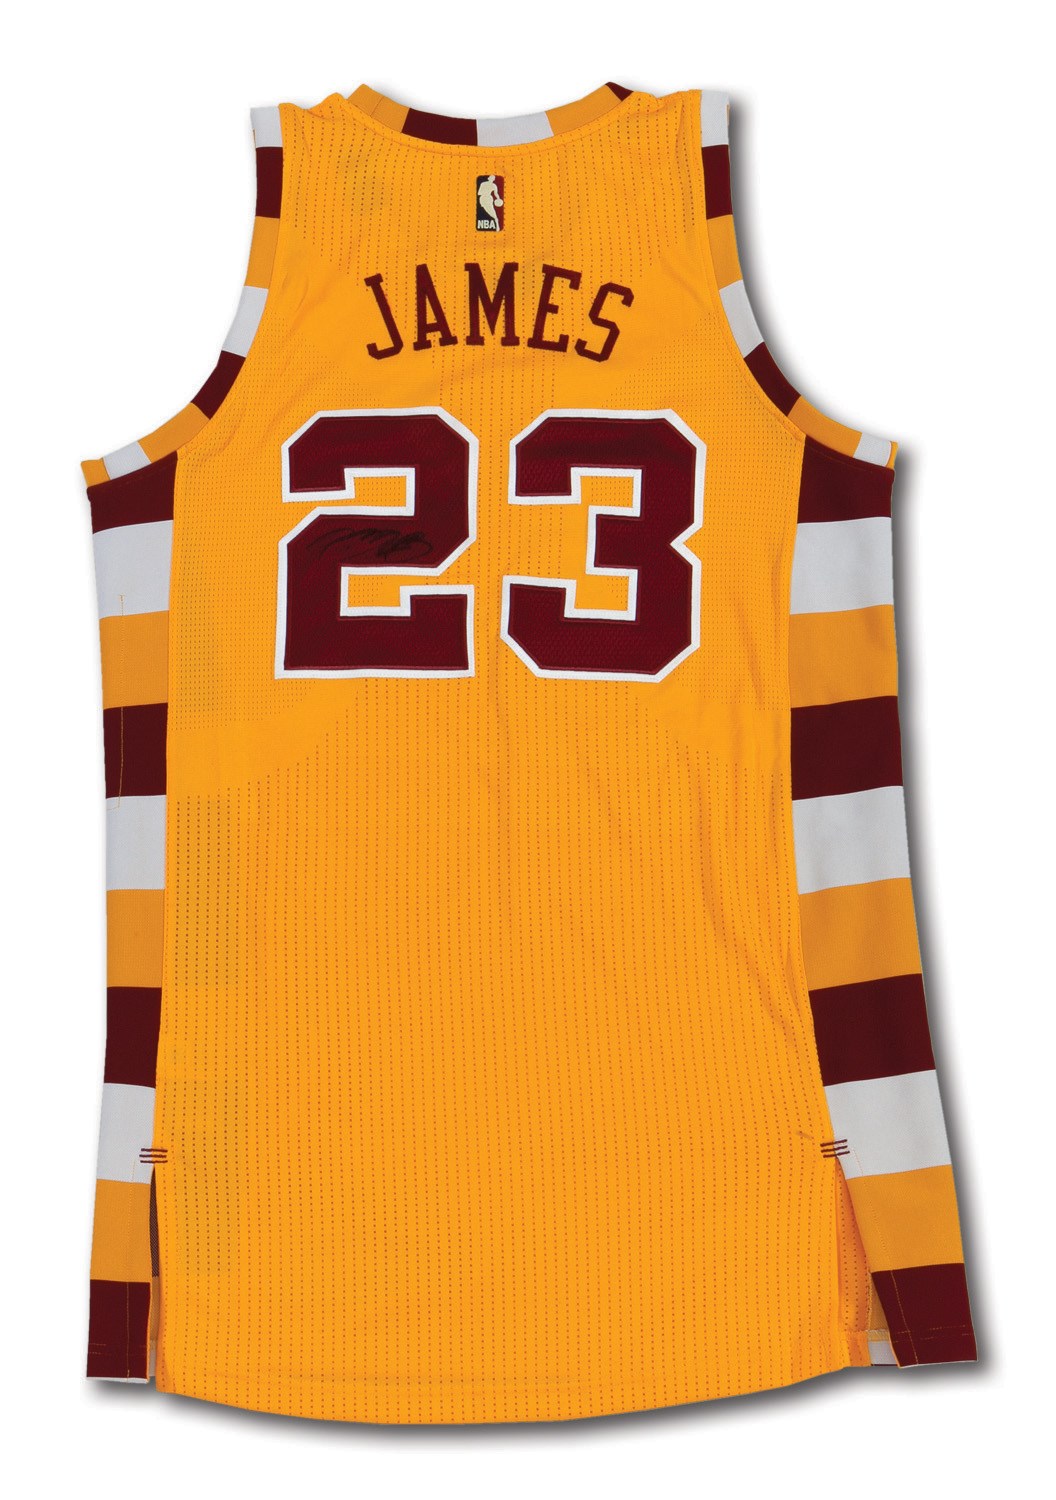 2014-16 LeBron James Game Worn Cleveland Cavaliers Alternate